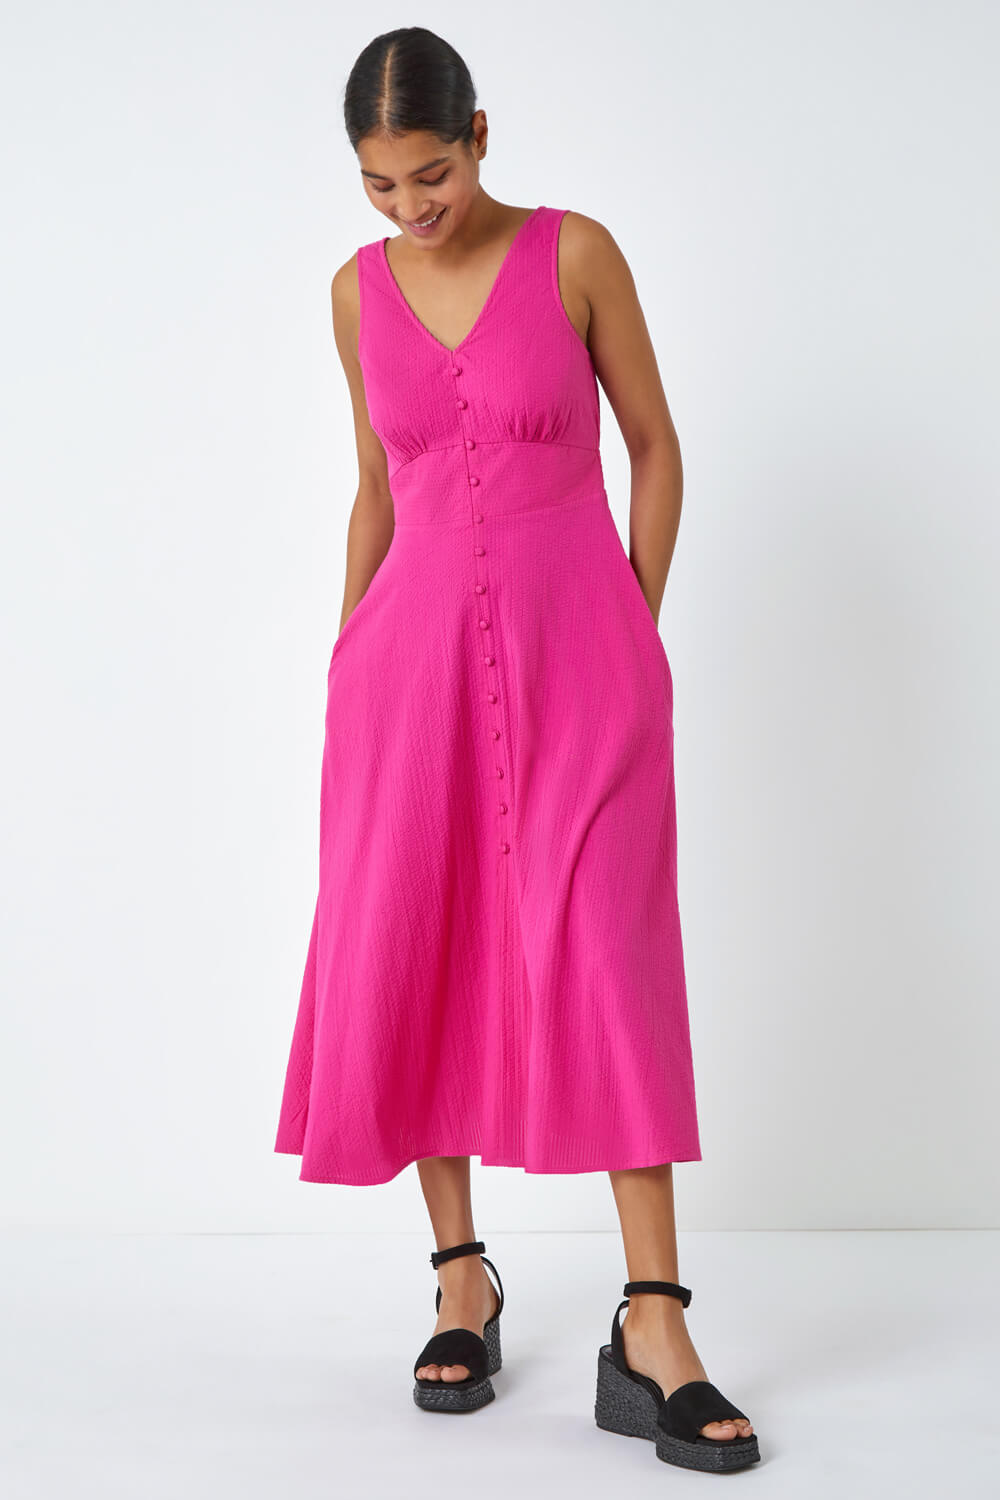 PINK Sleeveless Cotton Midi Dress, Image 2 of 5